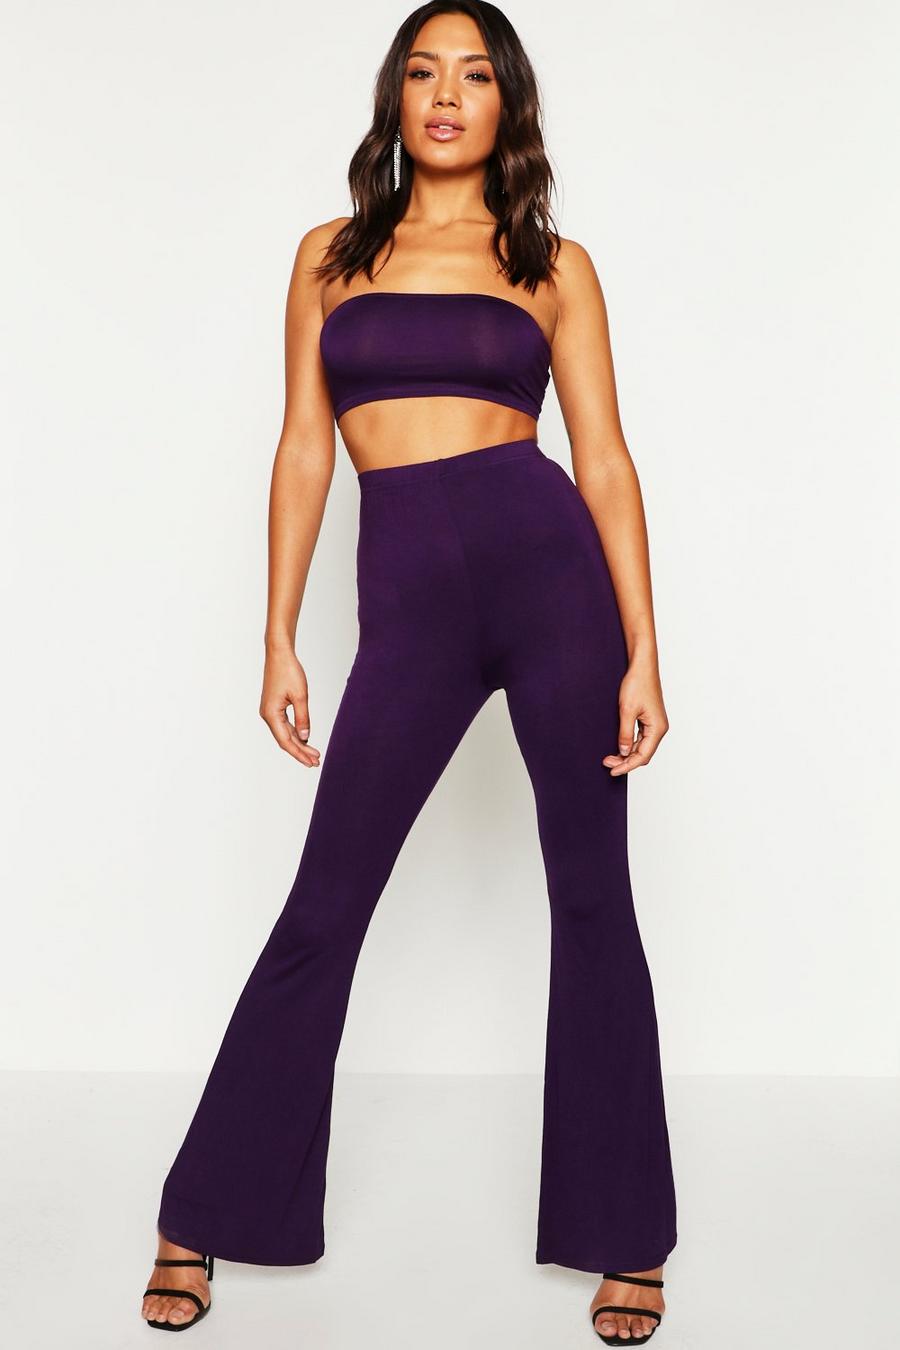 Jewel purple Basic Bandeau And Flared Pants Co-Ord Set image number 1